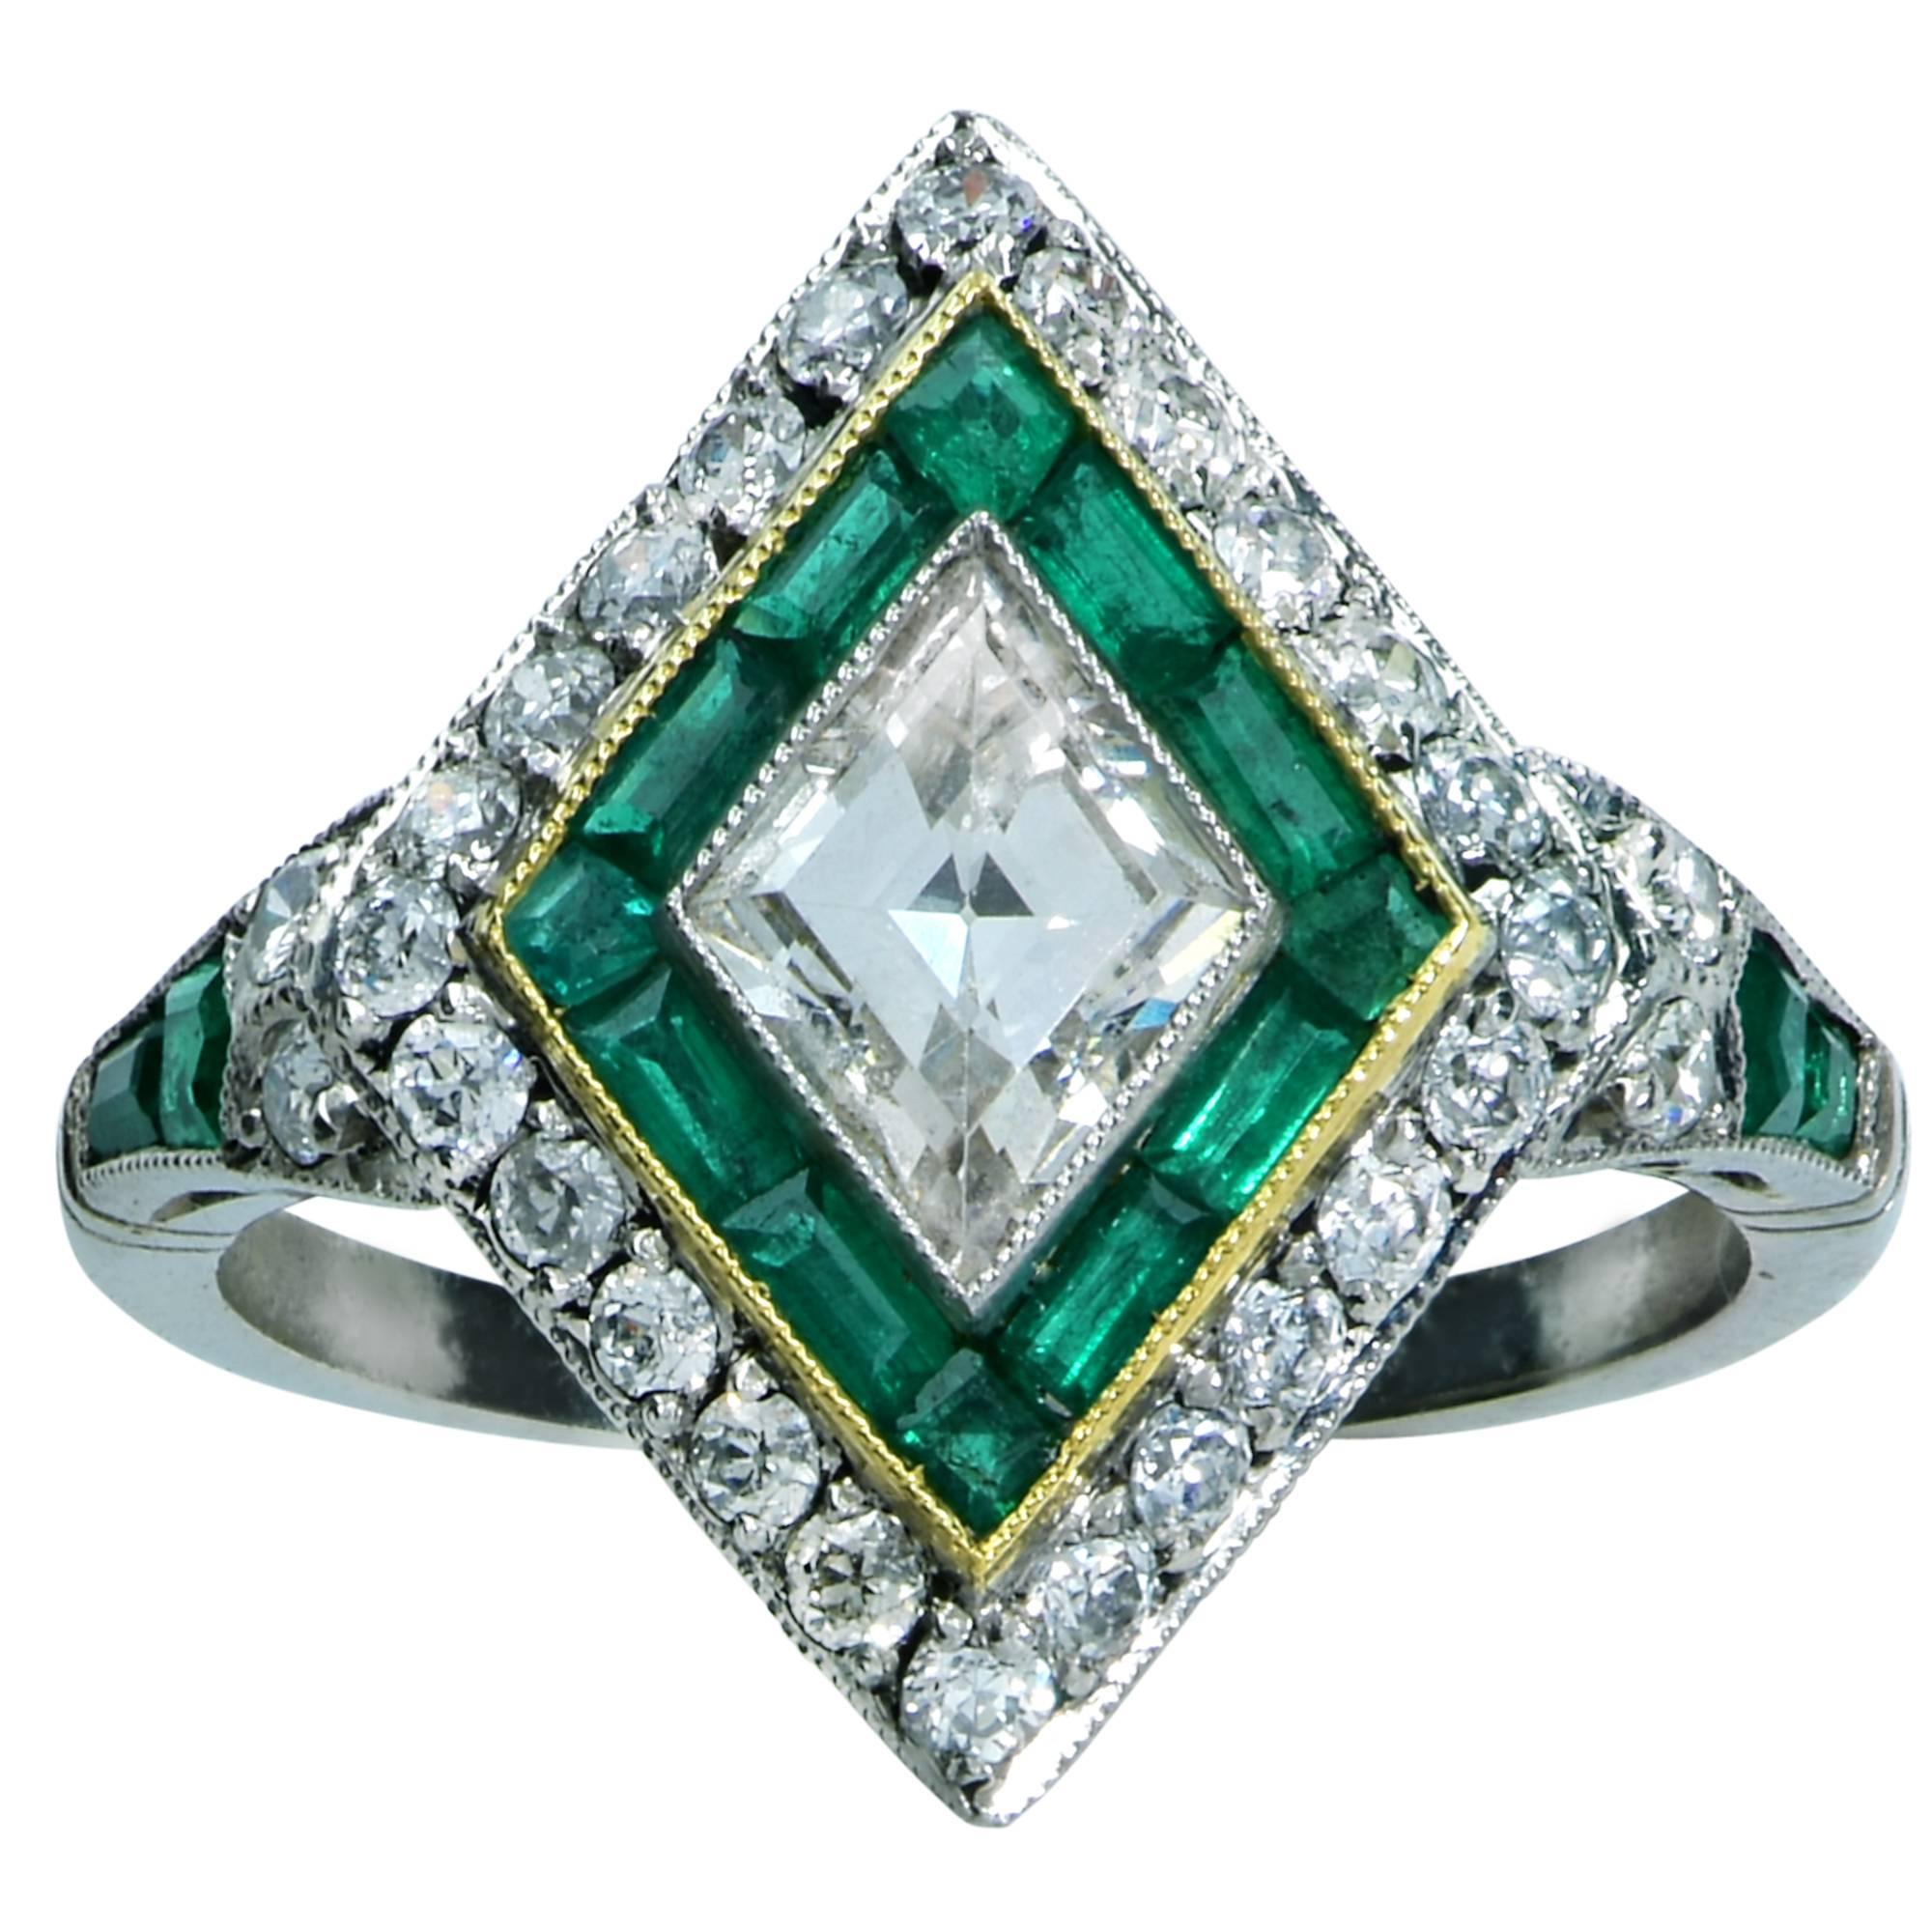 Old European Cut Modern Art Deco Style 1.35 Carat Diamond and Emerald Ring